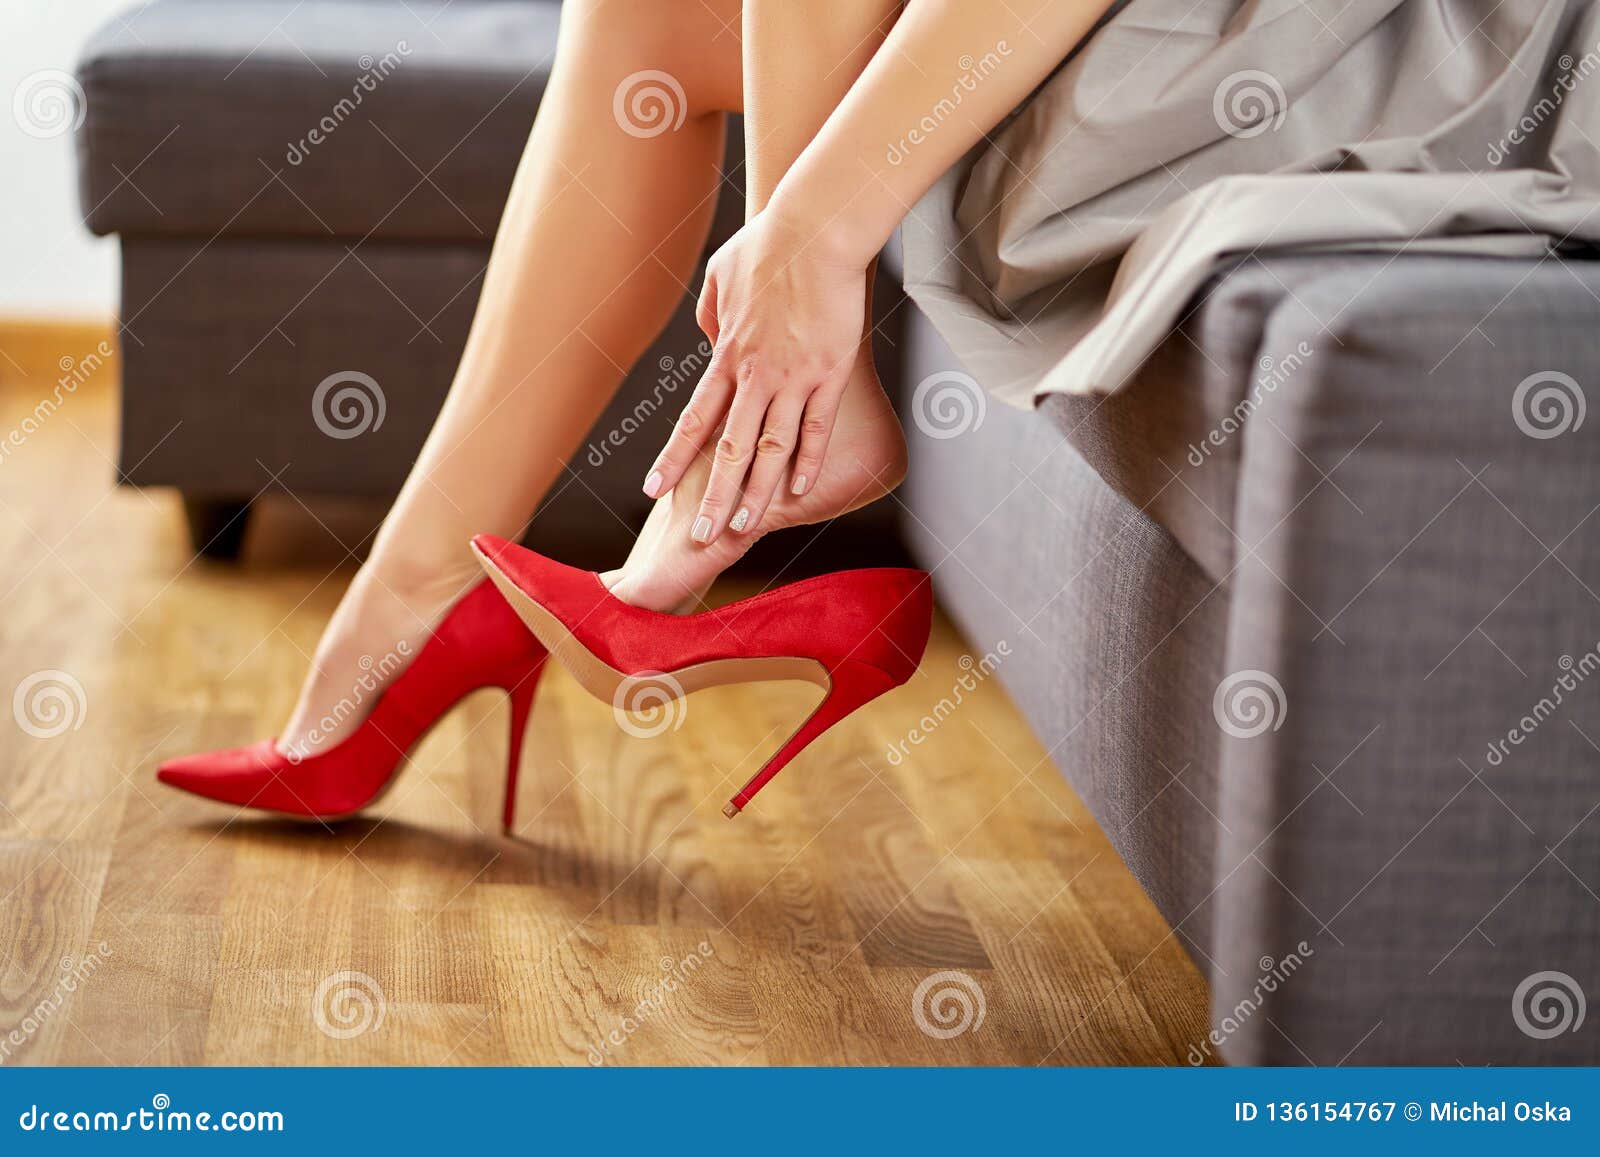 red work heels